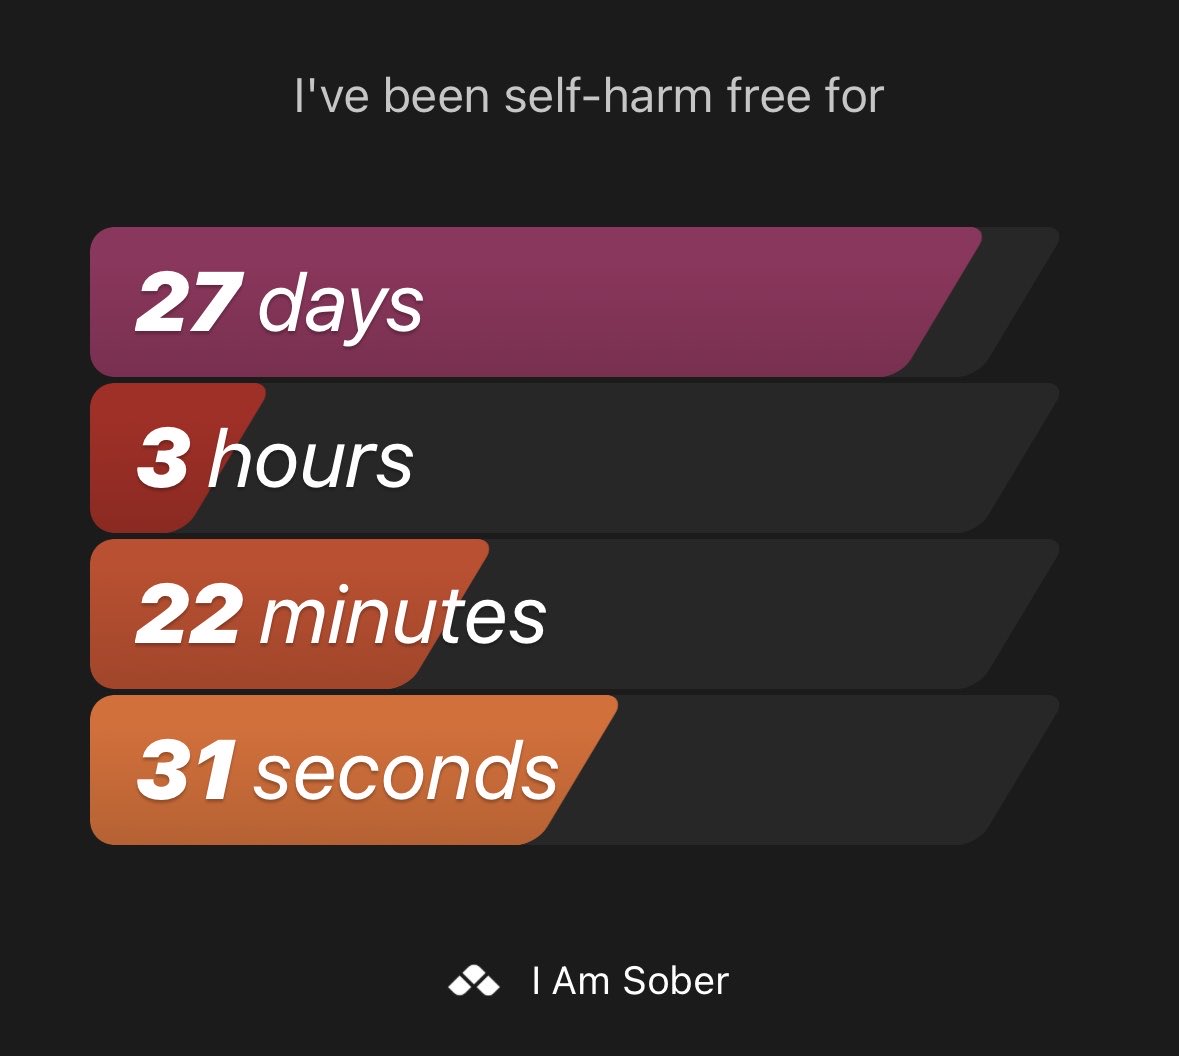 I've been self-harm free for 27 days #iamsober 😩😩😩